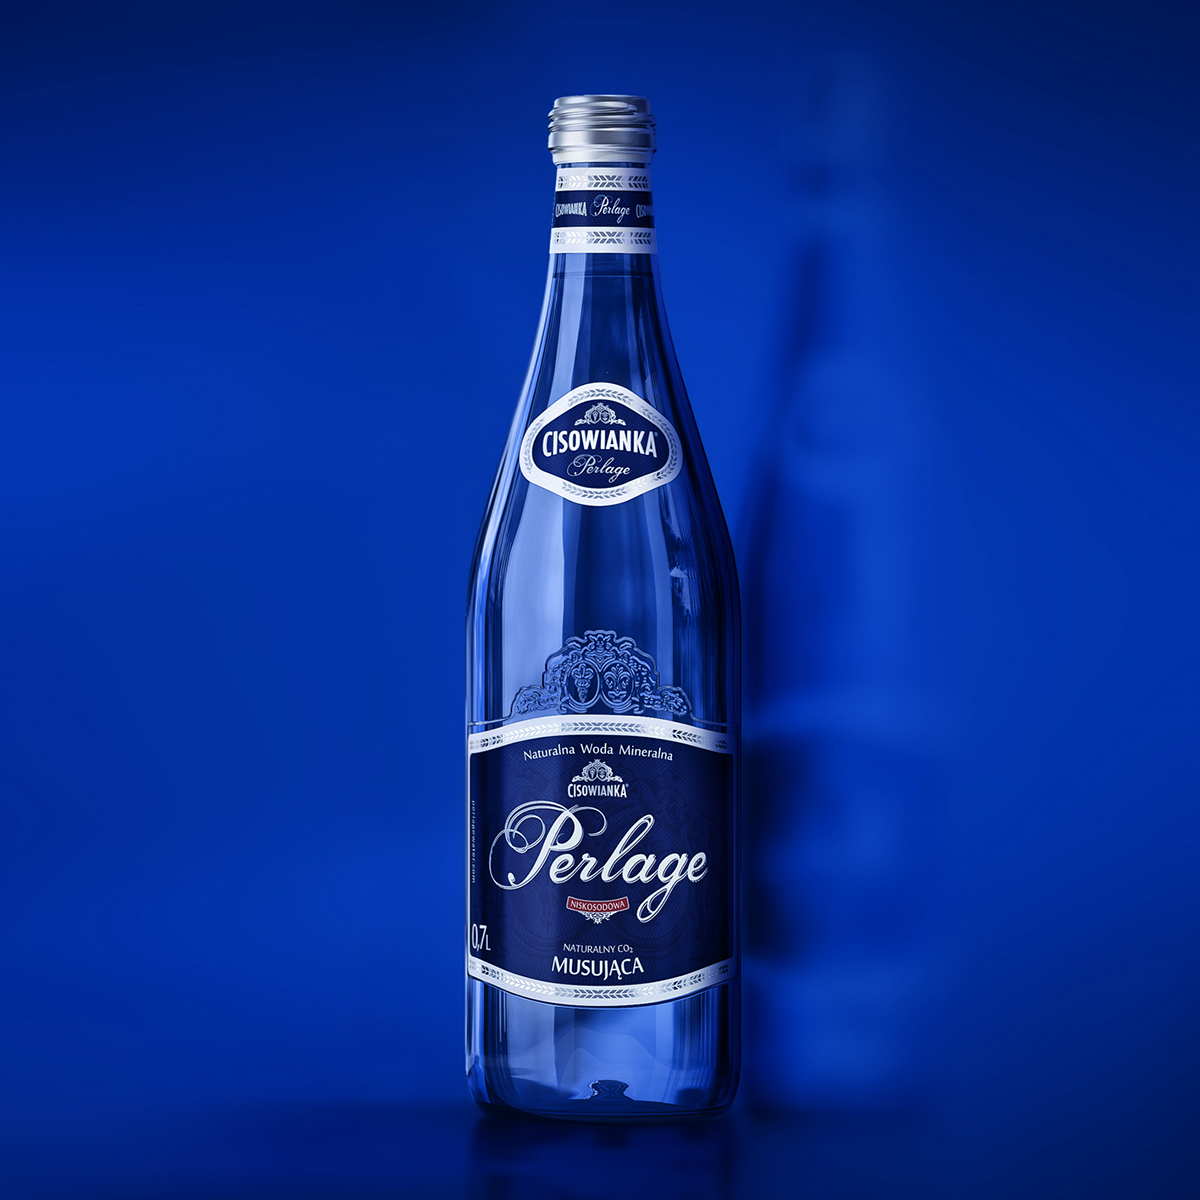 Damian Misiura perlage water bottle blue glass modo 3D cisowianka HDR Light Studio